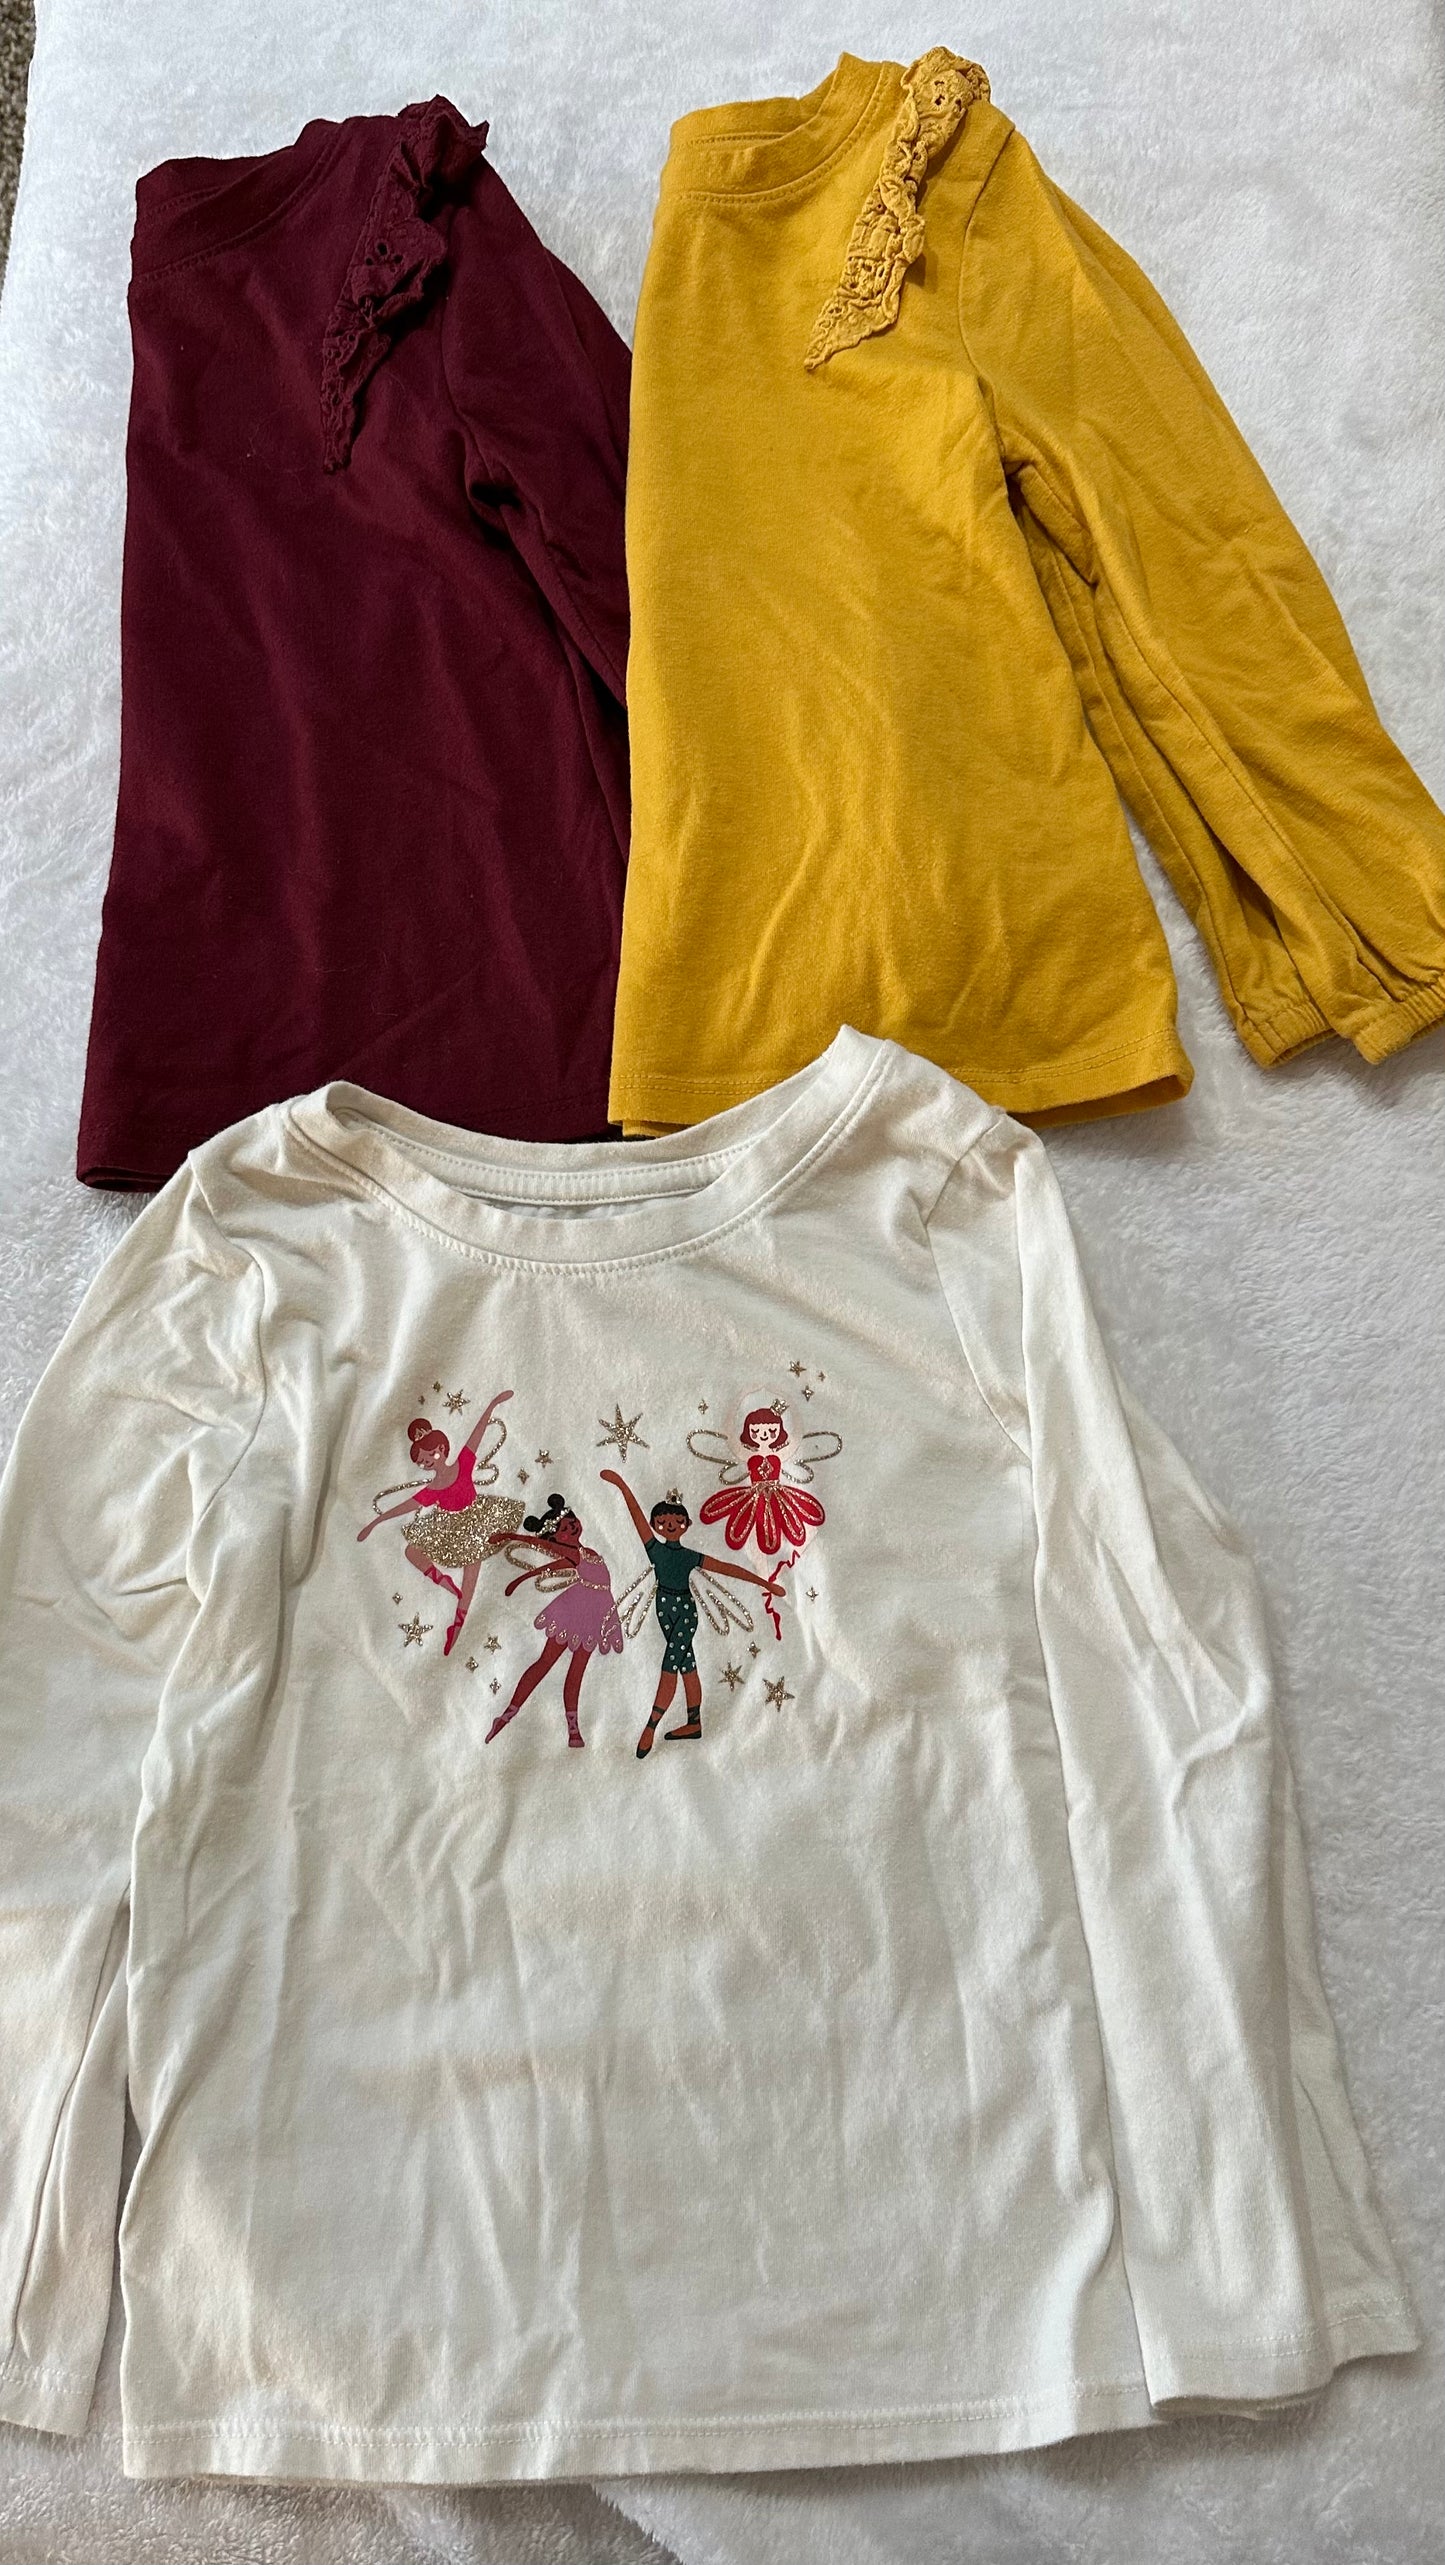 Girls 3T Cat and Jack set of 3 long sleeve shirts